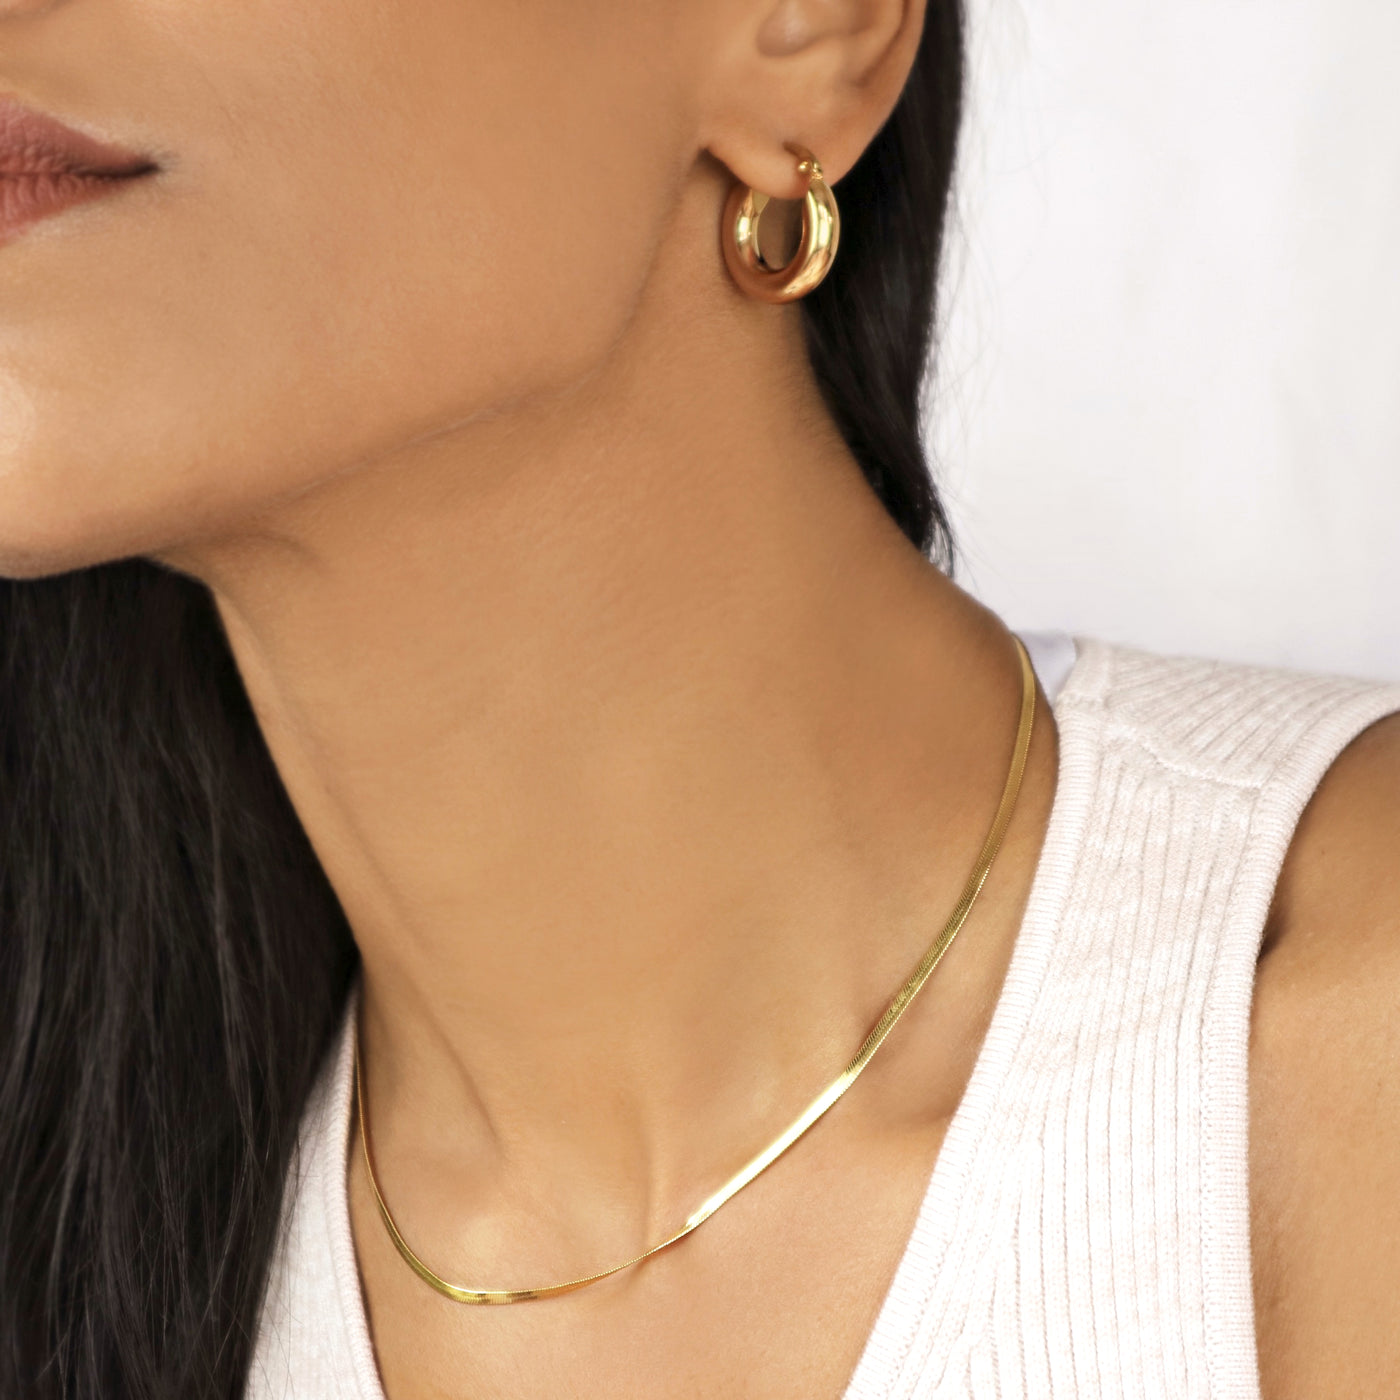 Gold snake chain necklace, waterproof & sweatproof, Rani & Co.